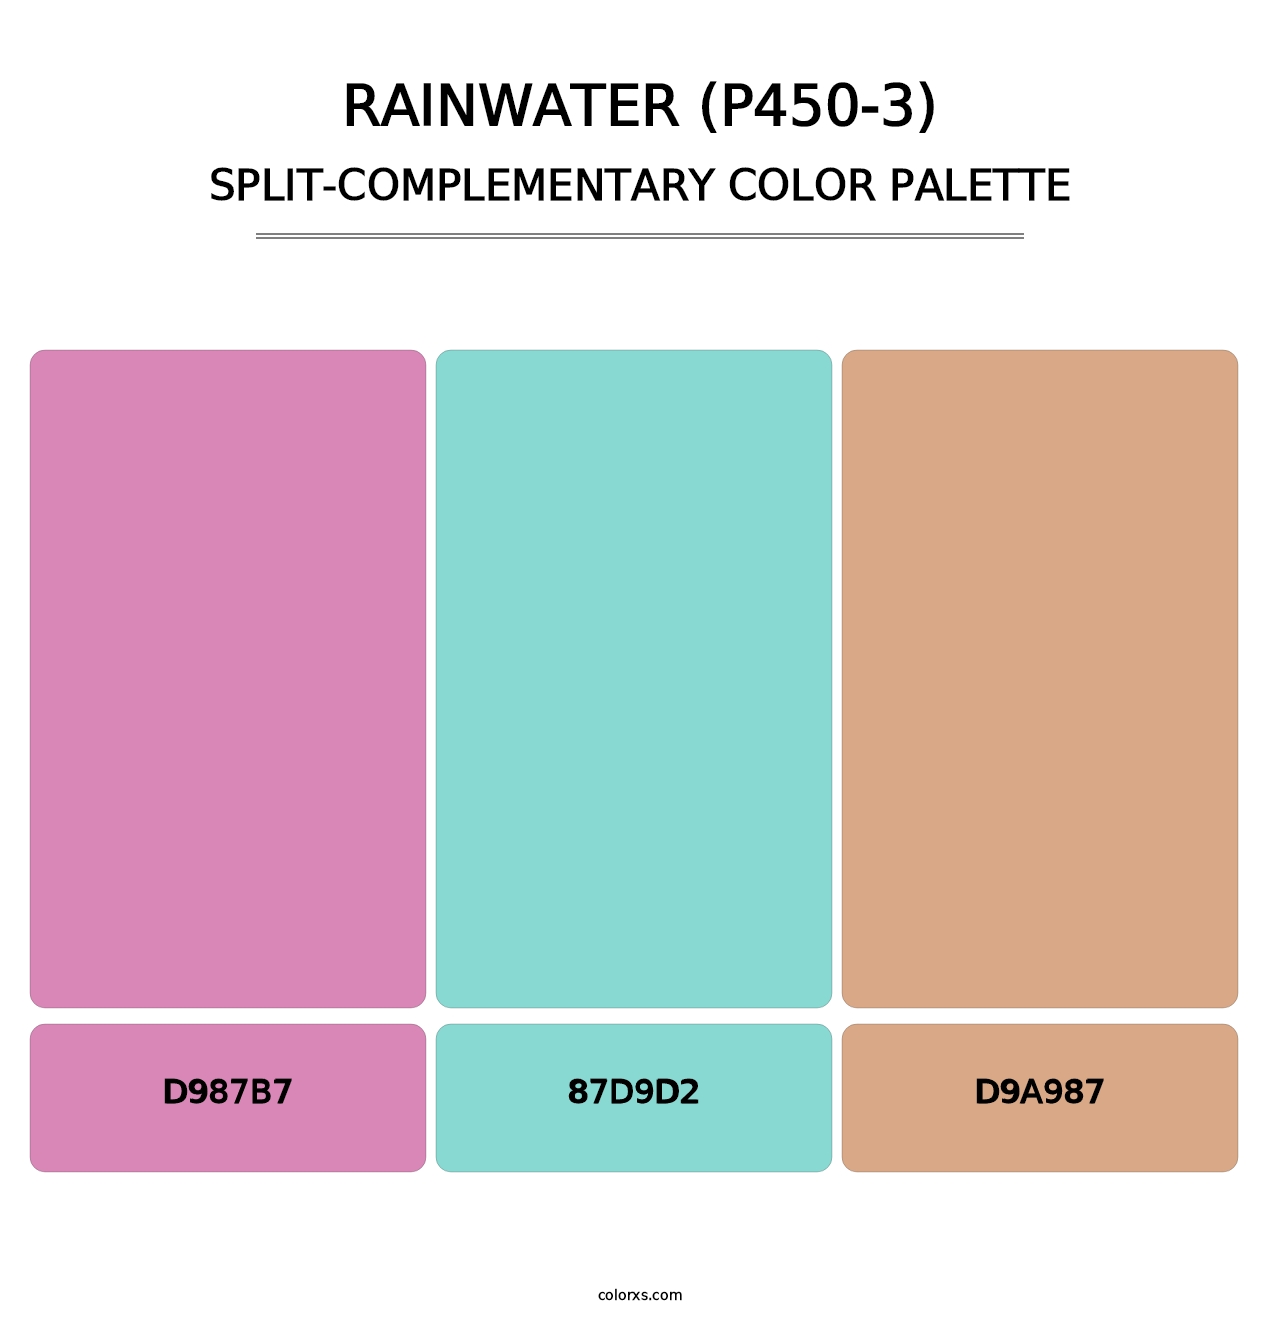 Rainwater (P450-3) - Split-Complementary Color Palette